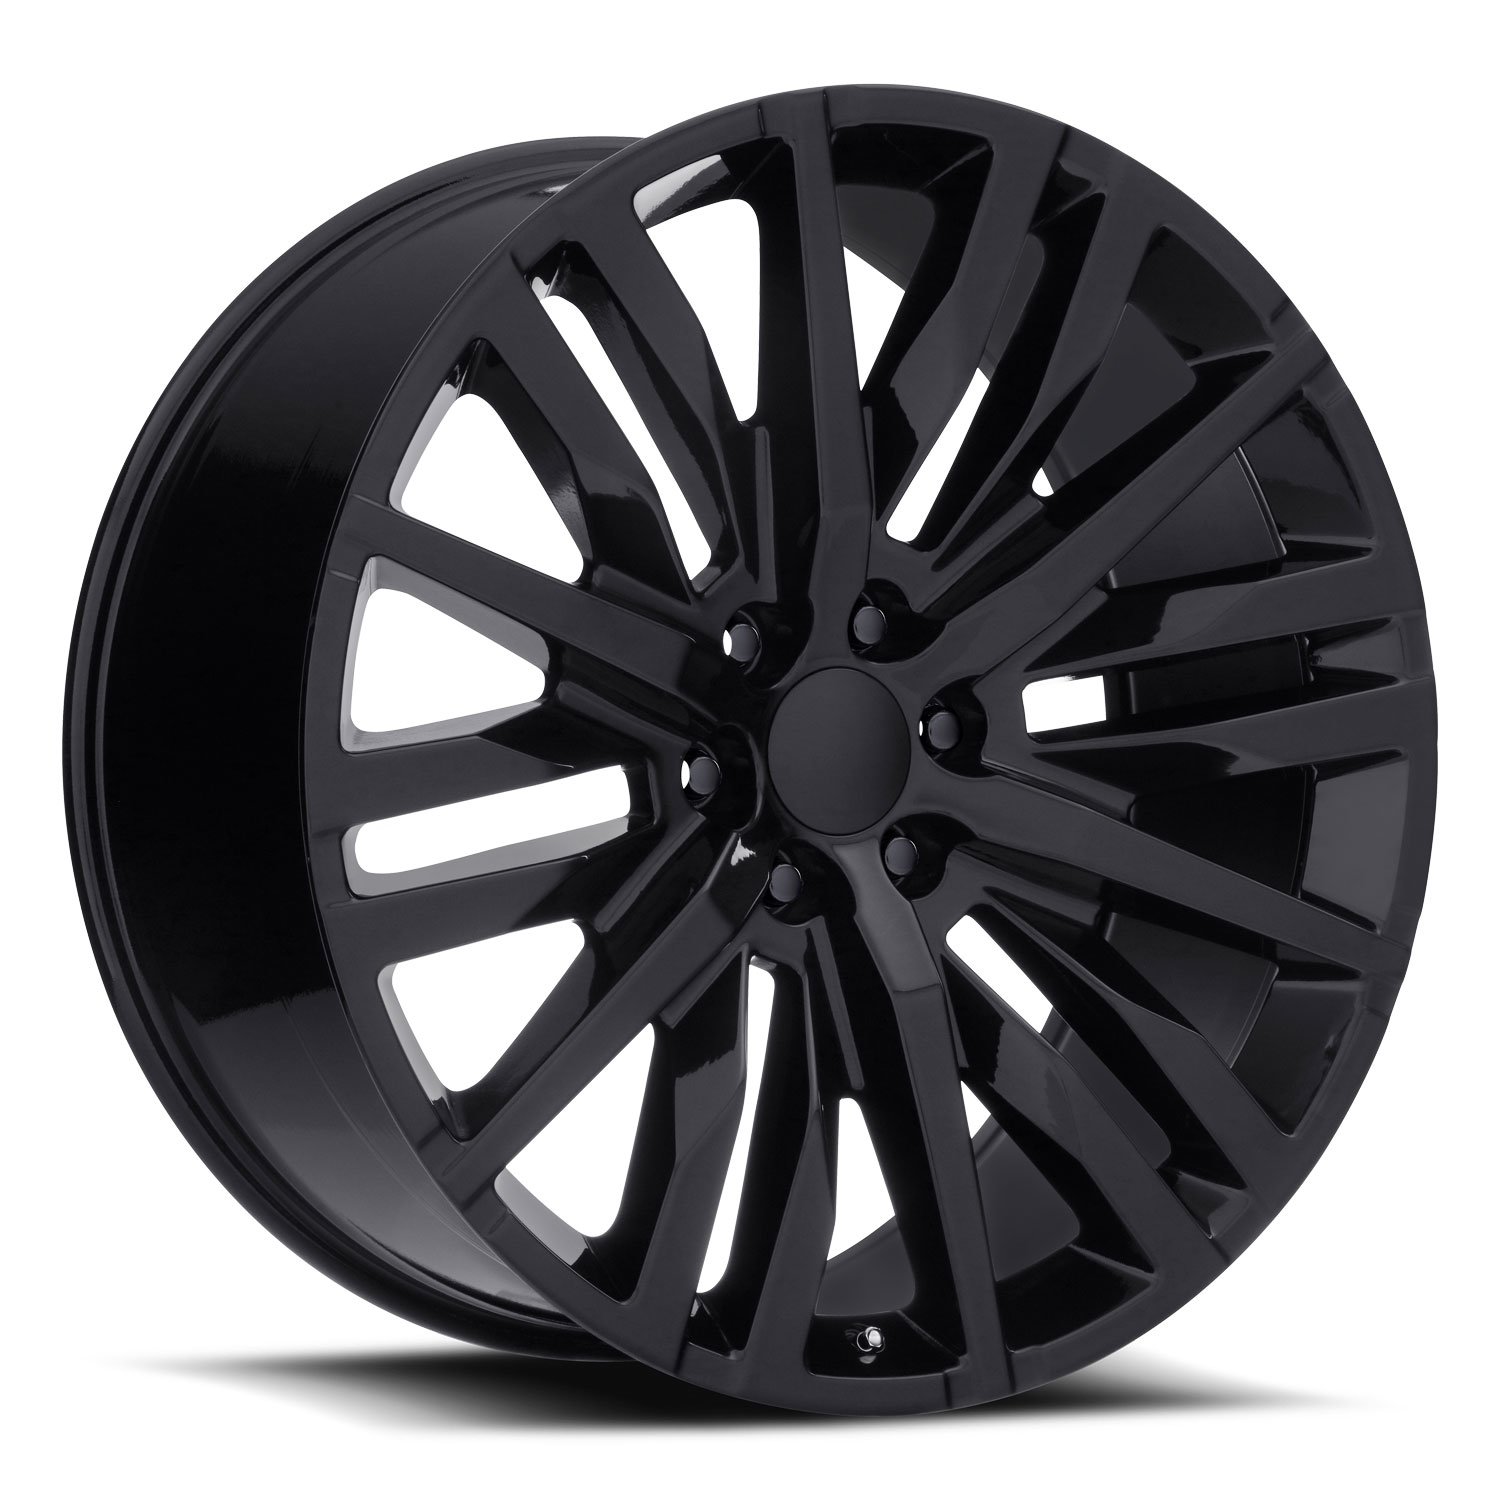 FR97-2410-Gloss-Black-02-GMC-Split-6-spoke-factory-reproductions-wheels-rims-std-1500